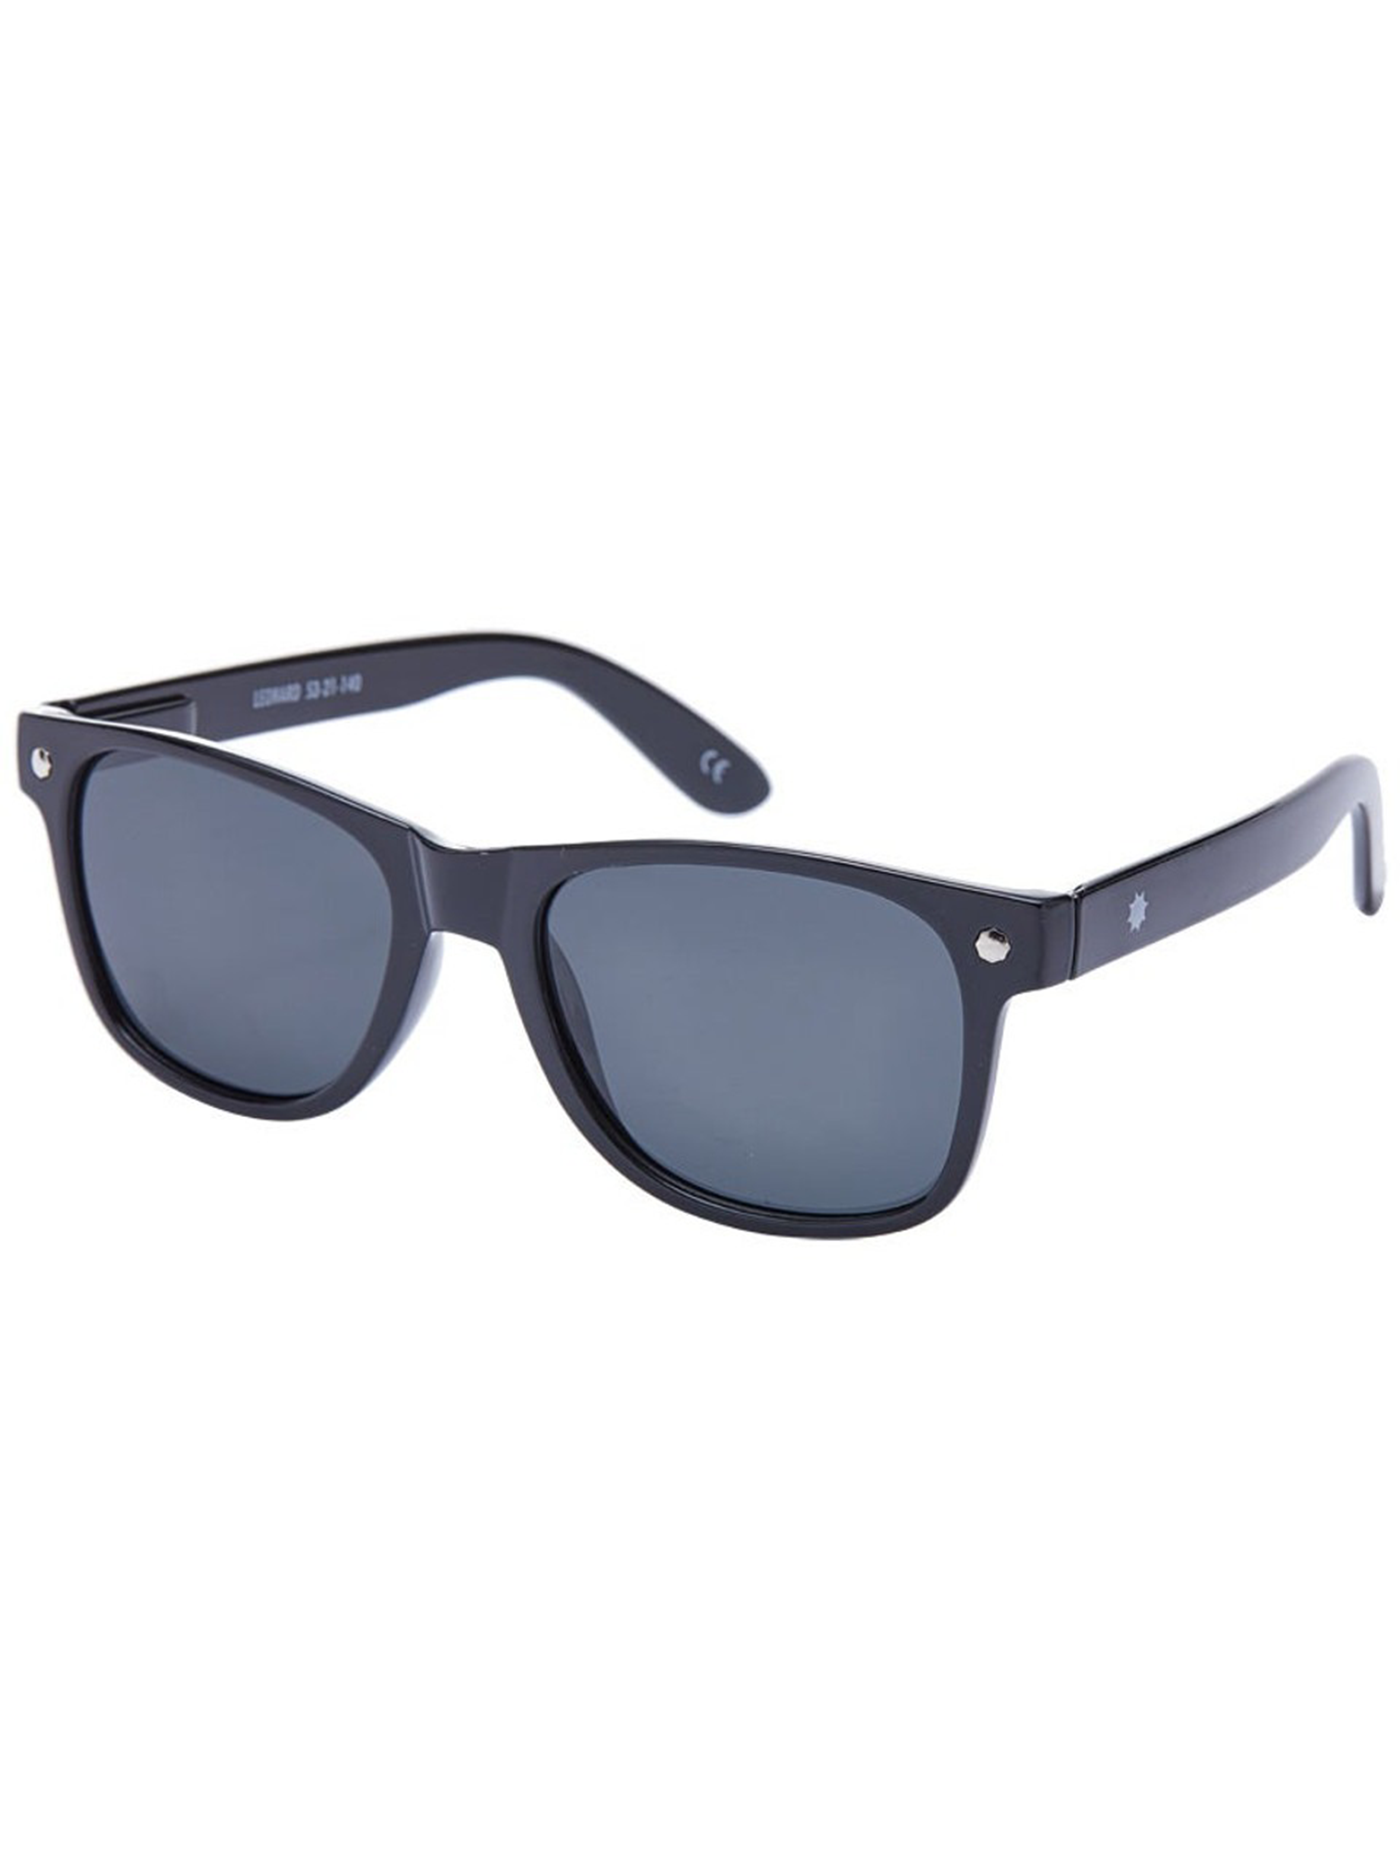 Glassy Leonard Polarized Sunglasses